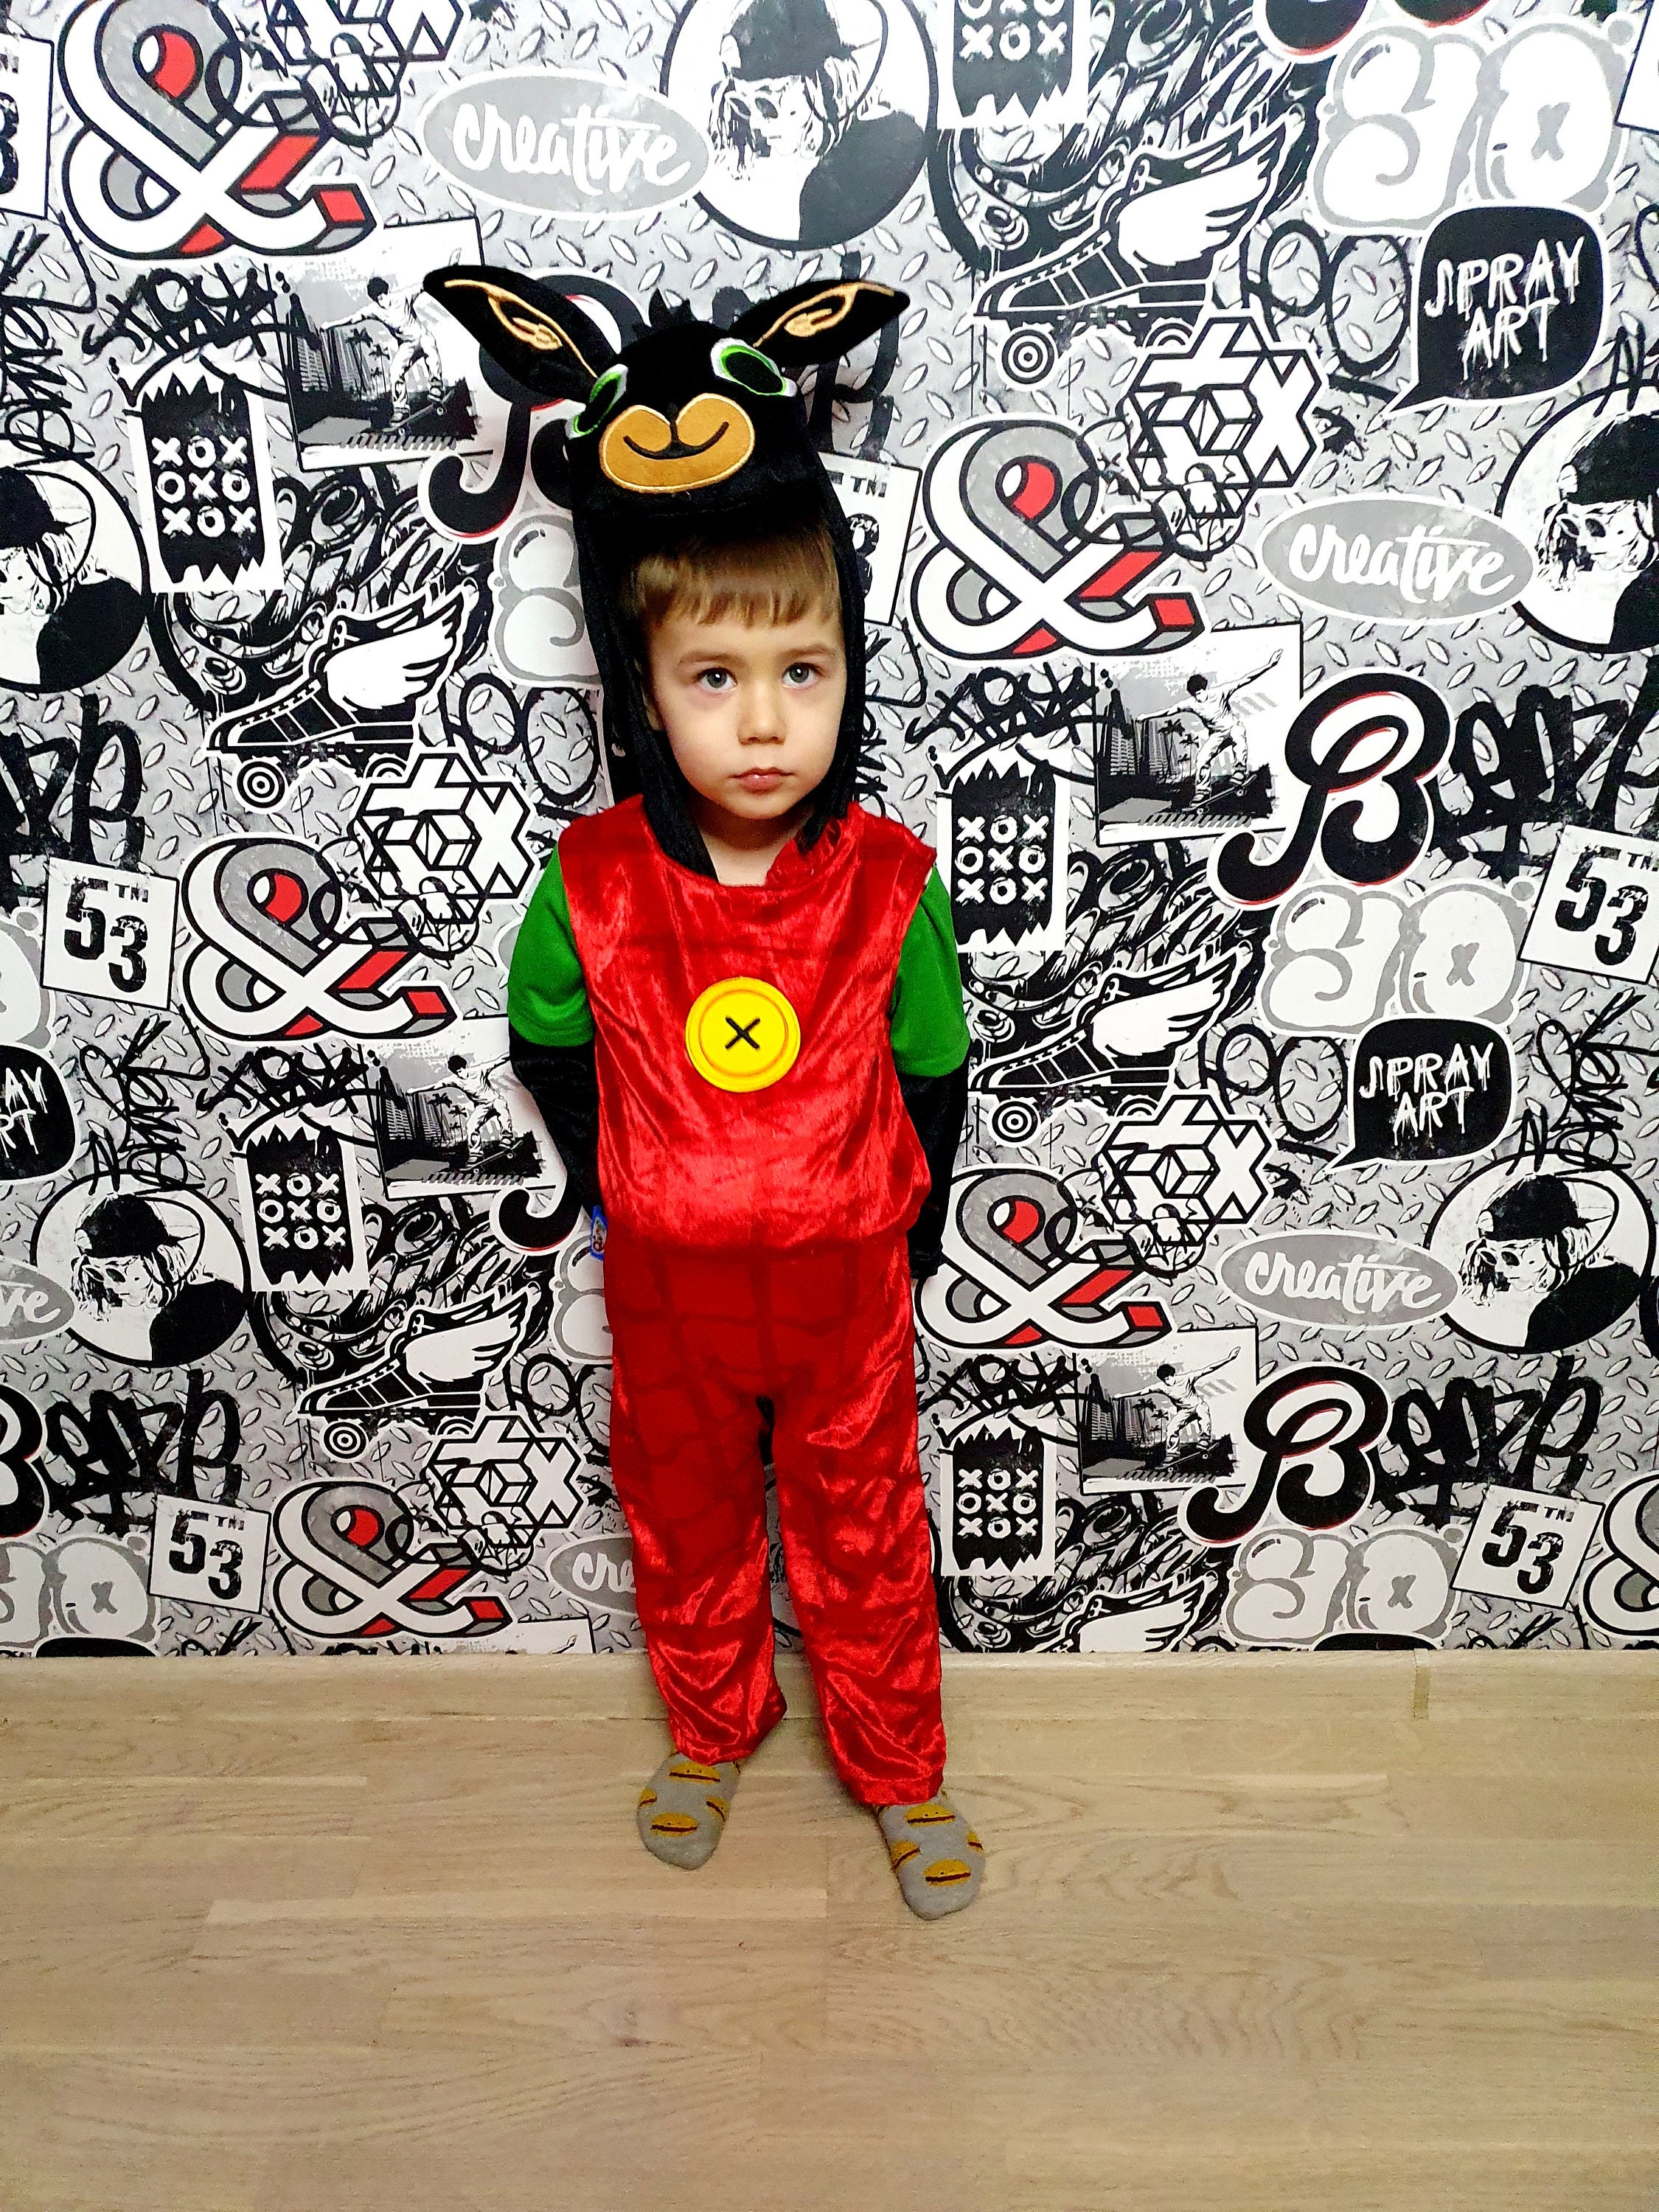 3T Kids Cosplay Bing Bunny Costume Halloween Costume Animal